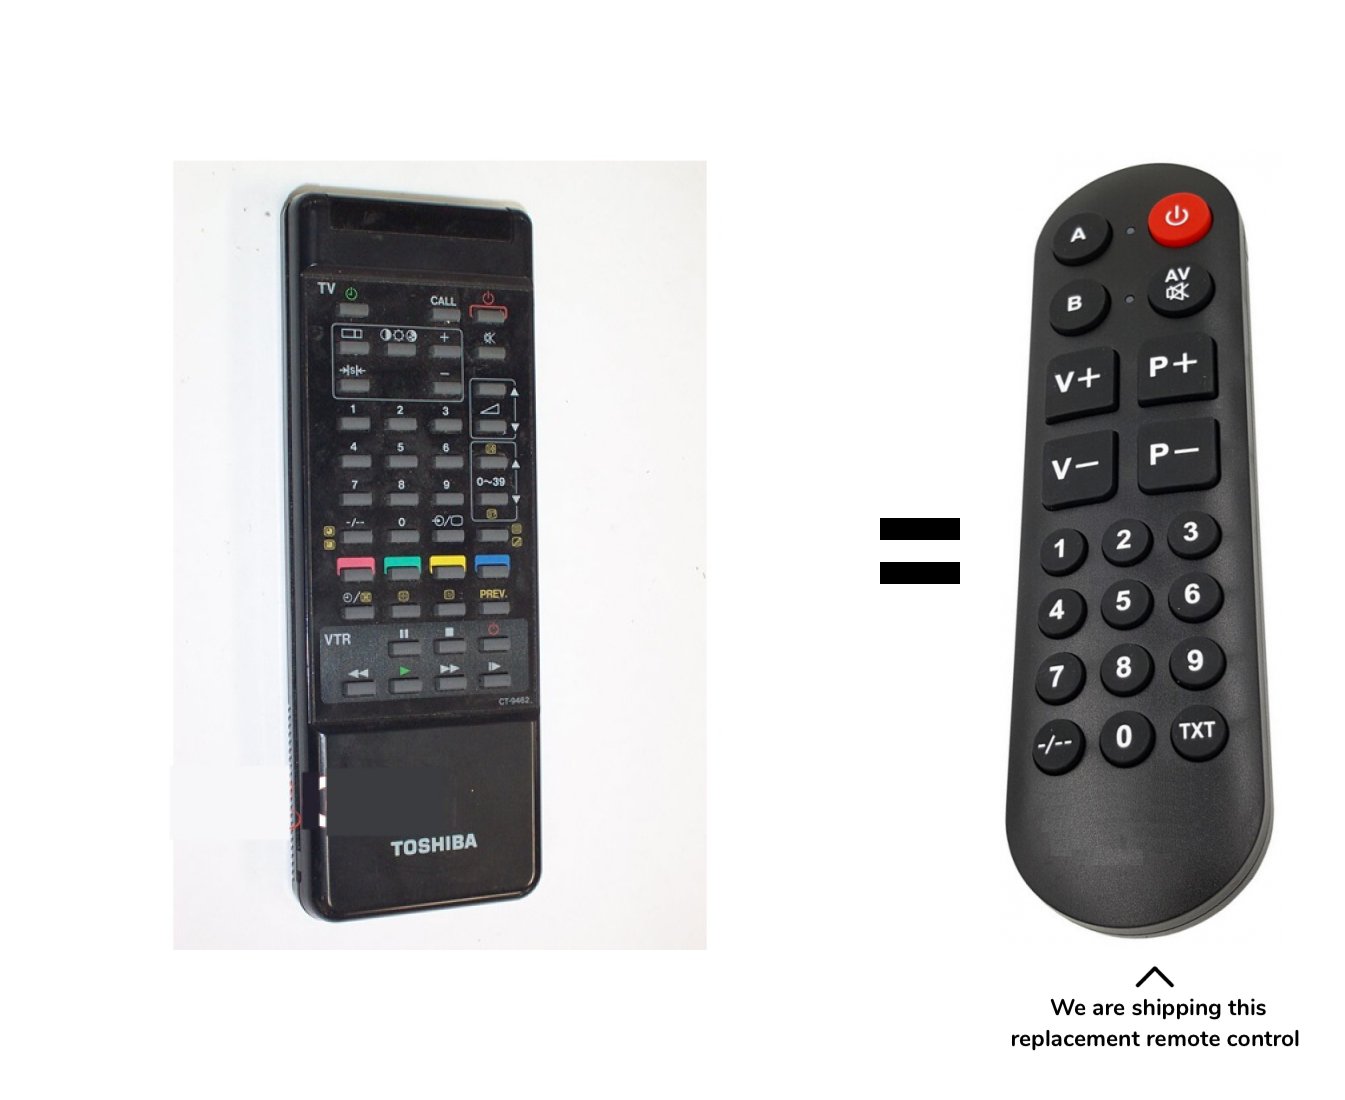 Toshiba 147T9M remote control for seniors